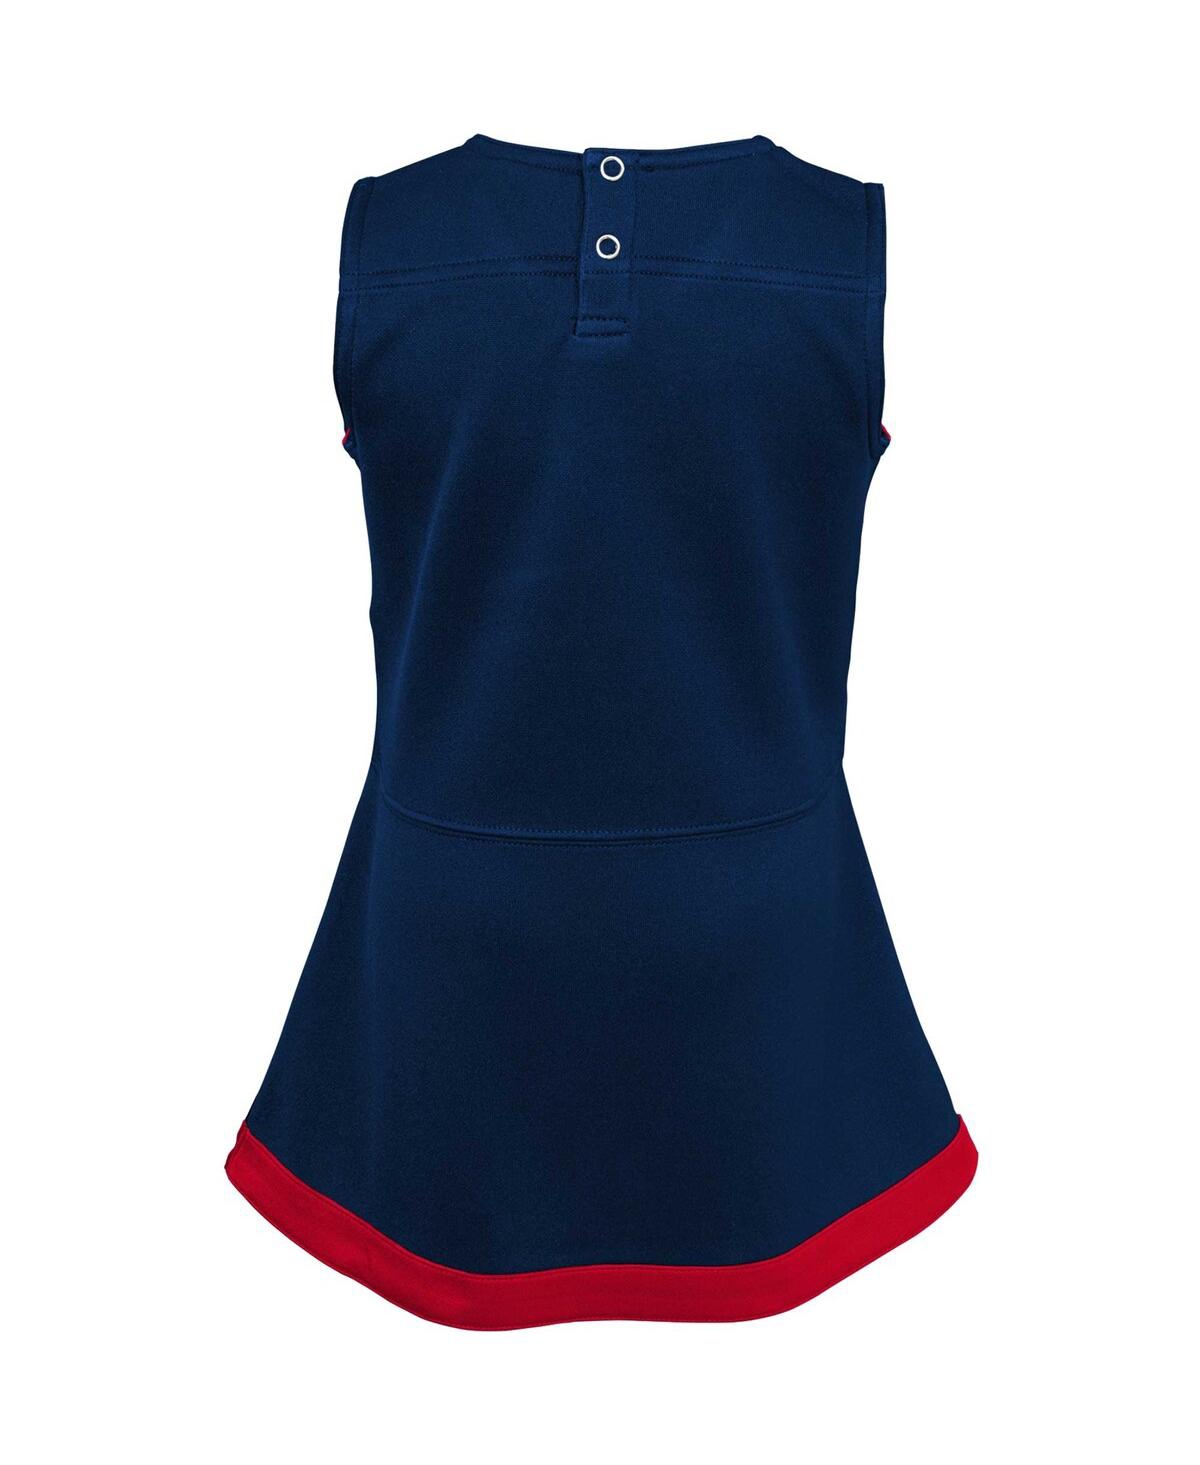 Shop Outerstuff Baby Girls Navy New England Patriots Cheer Captain Jumper Dress